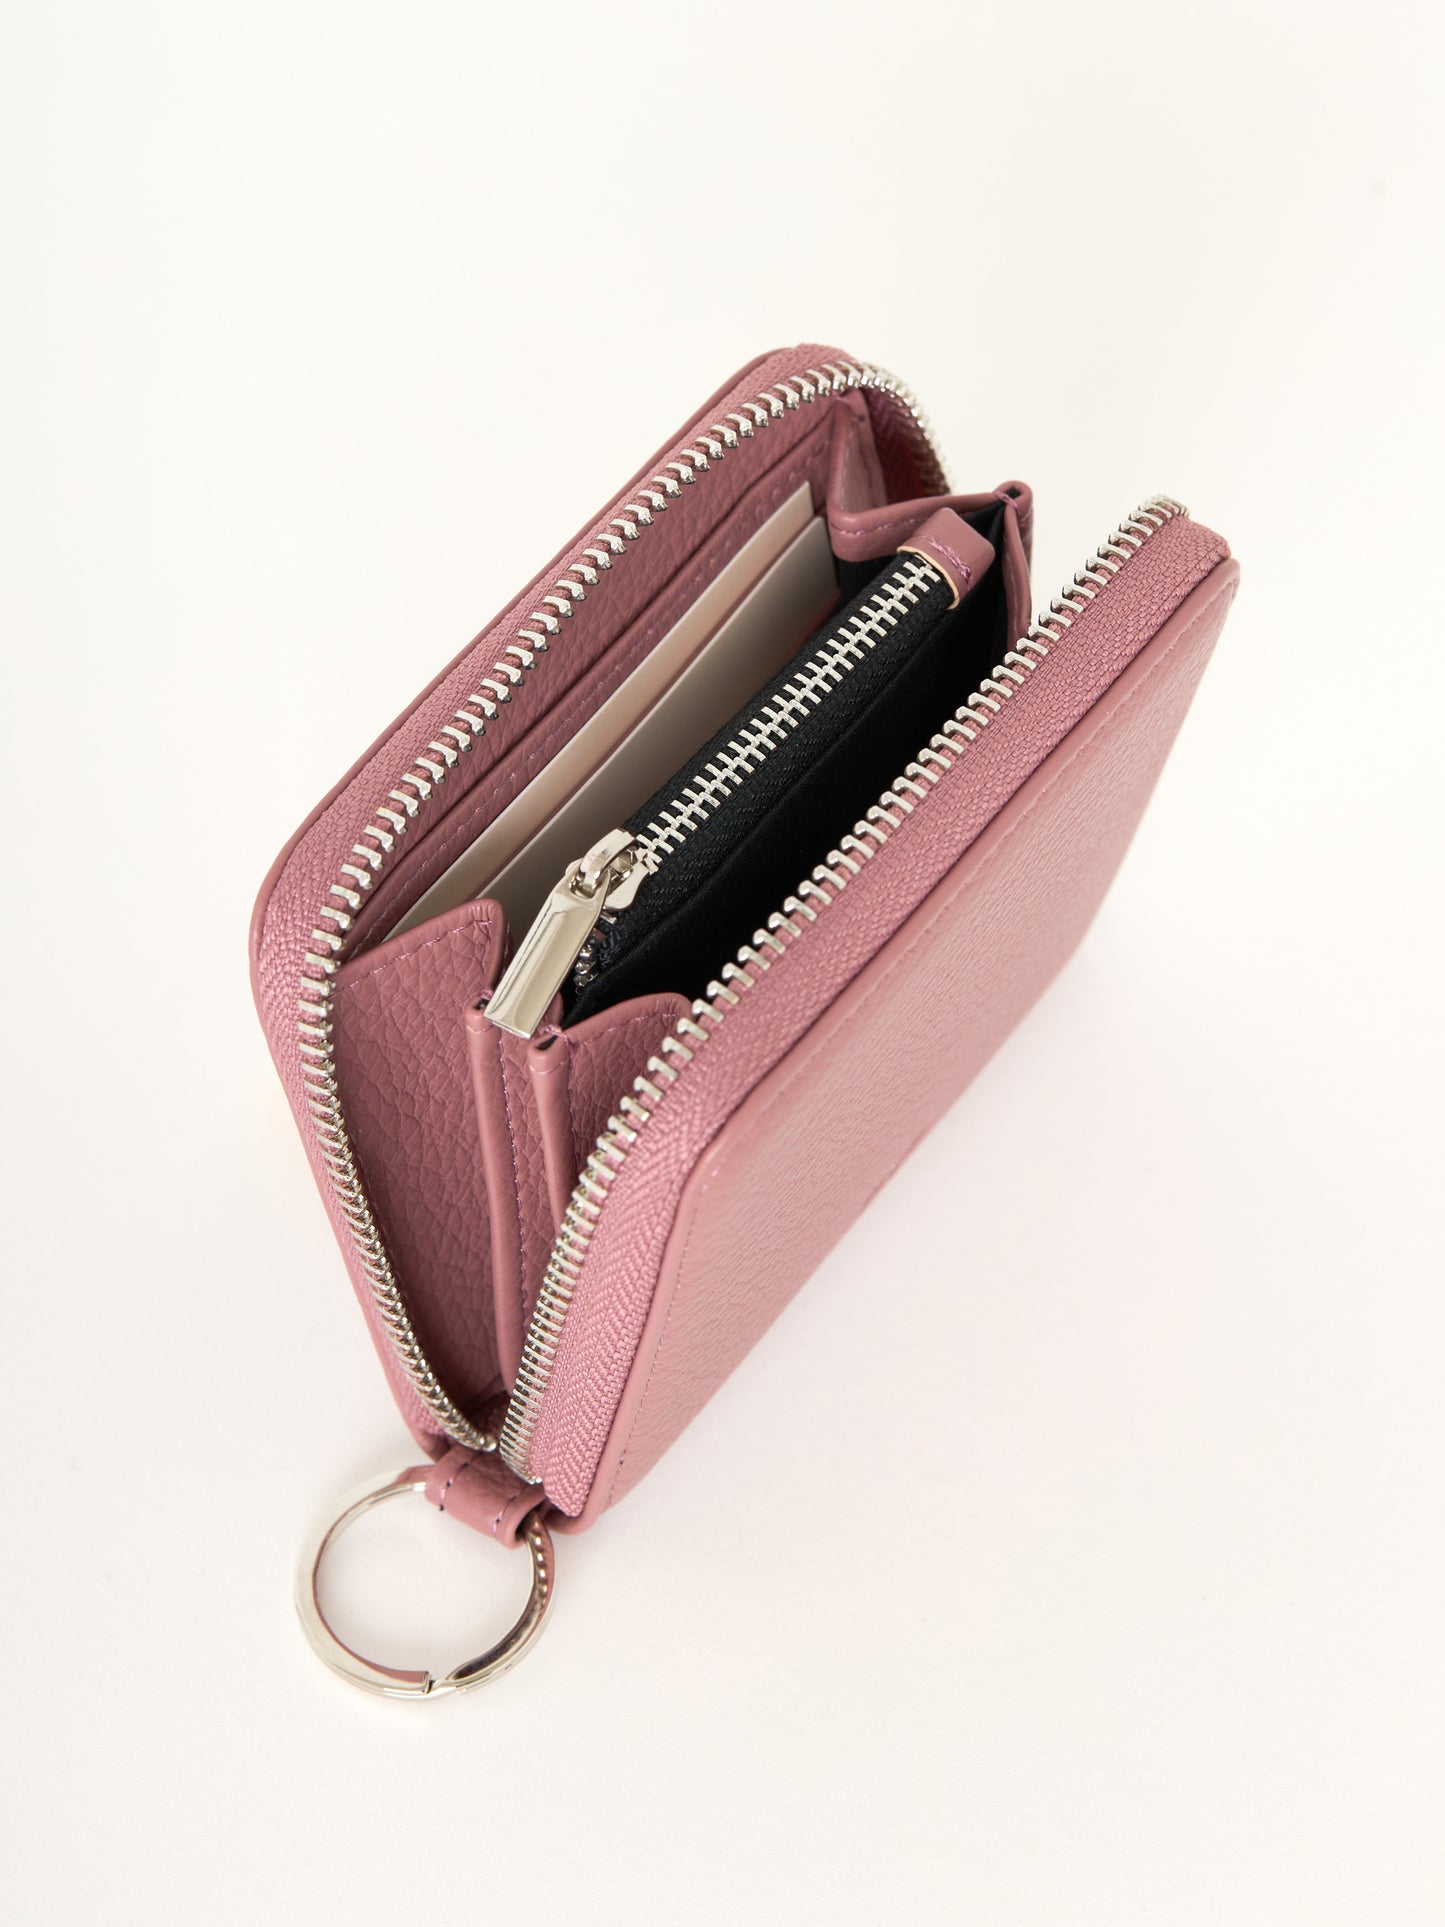 Accessories - COLAB - Kelly Flex Bests Small Wallet - PLENTY